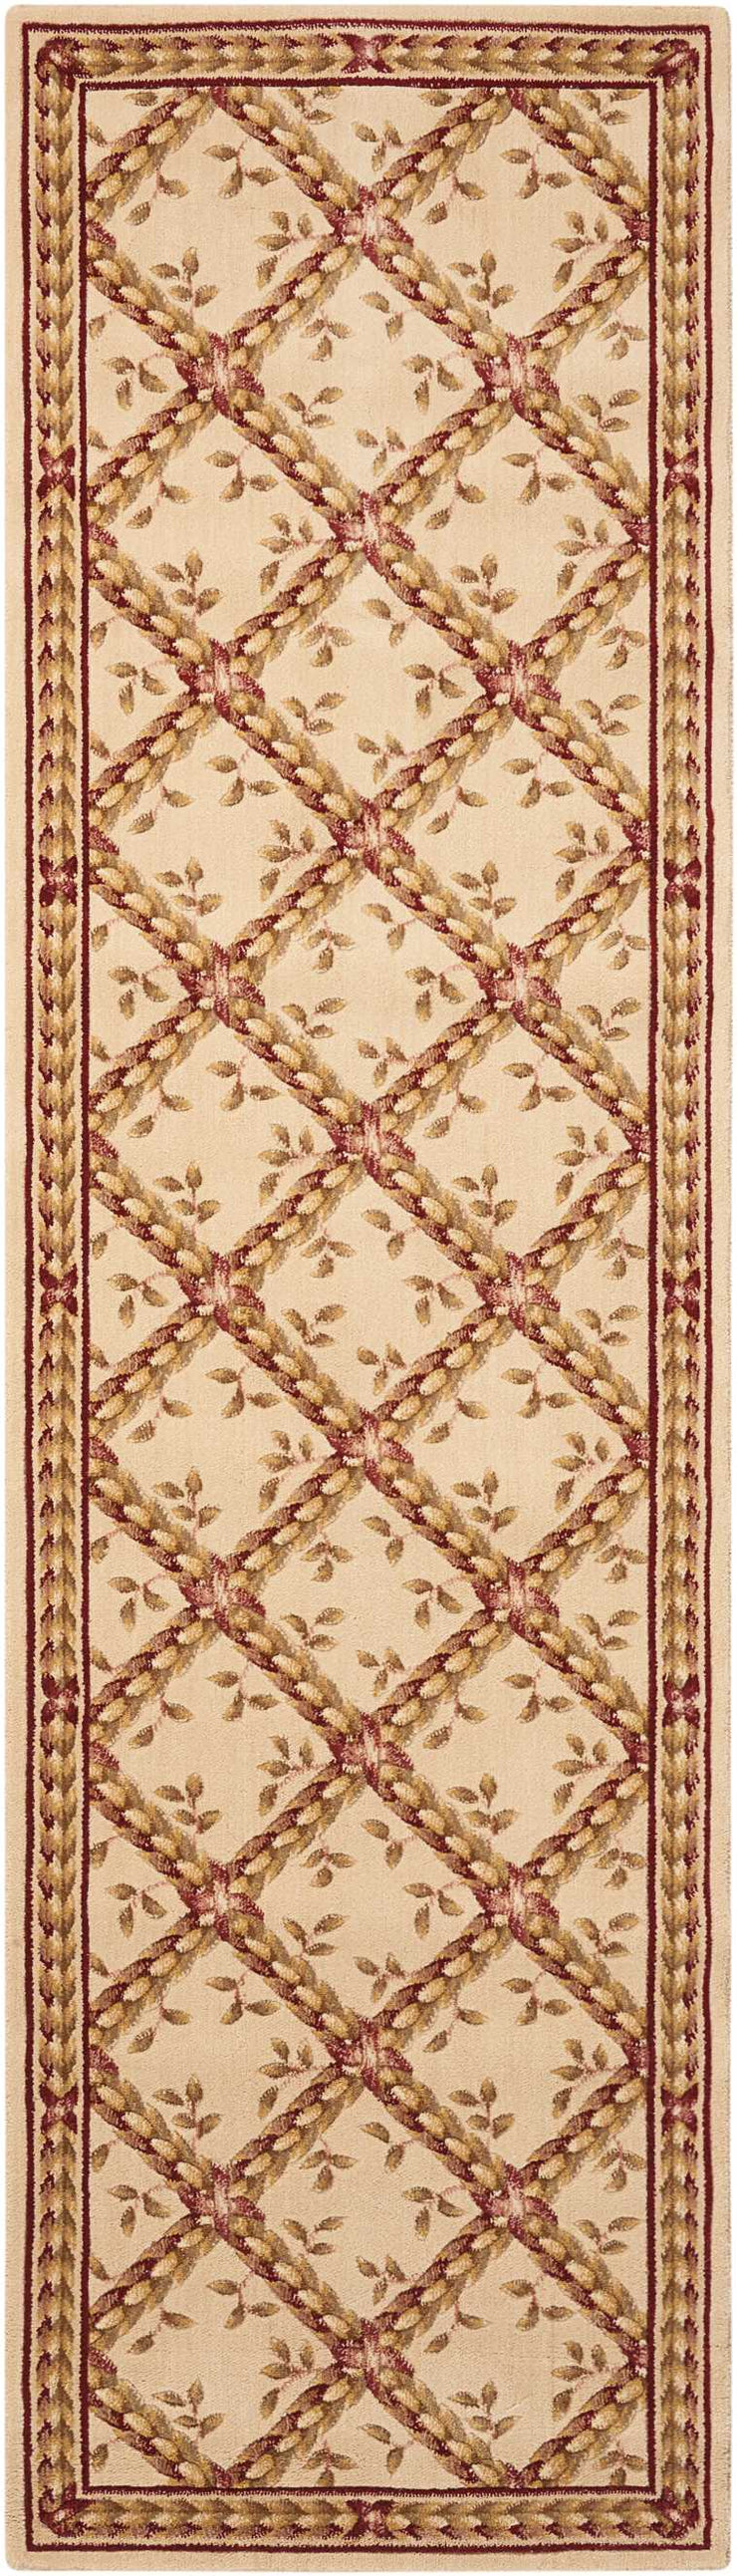 ashton house beige rug by nourison nsn 099446195630 1